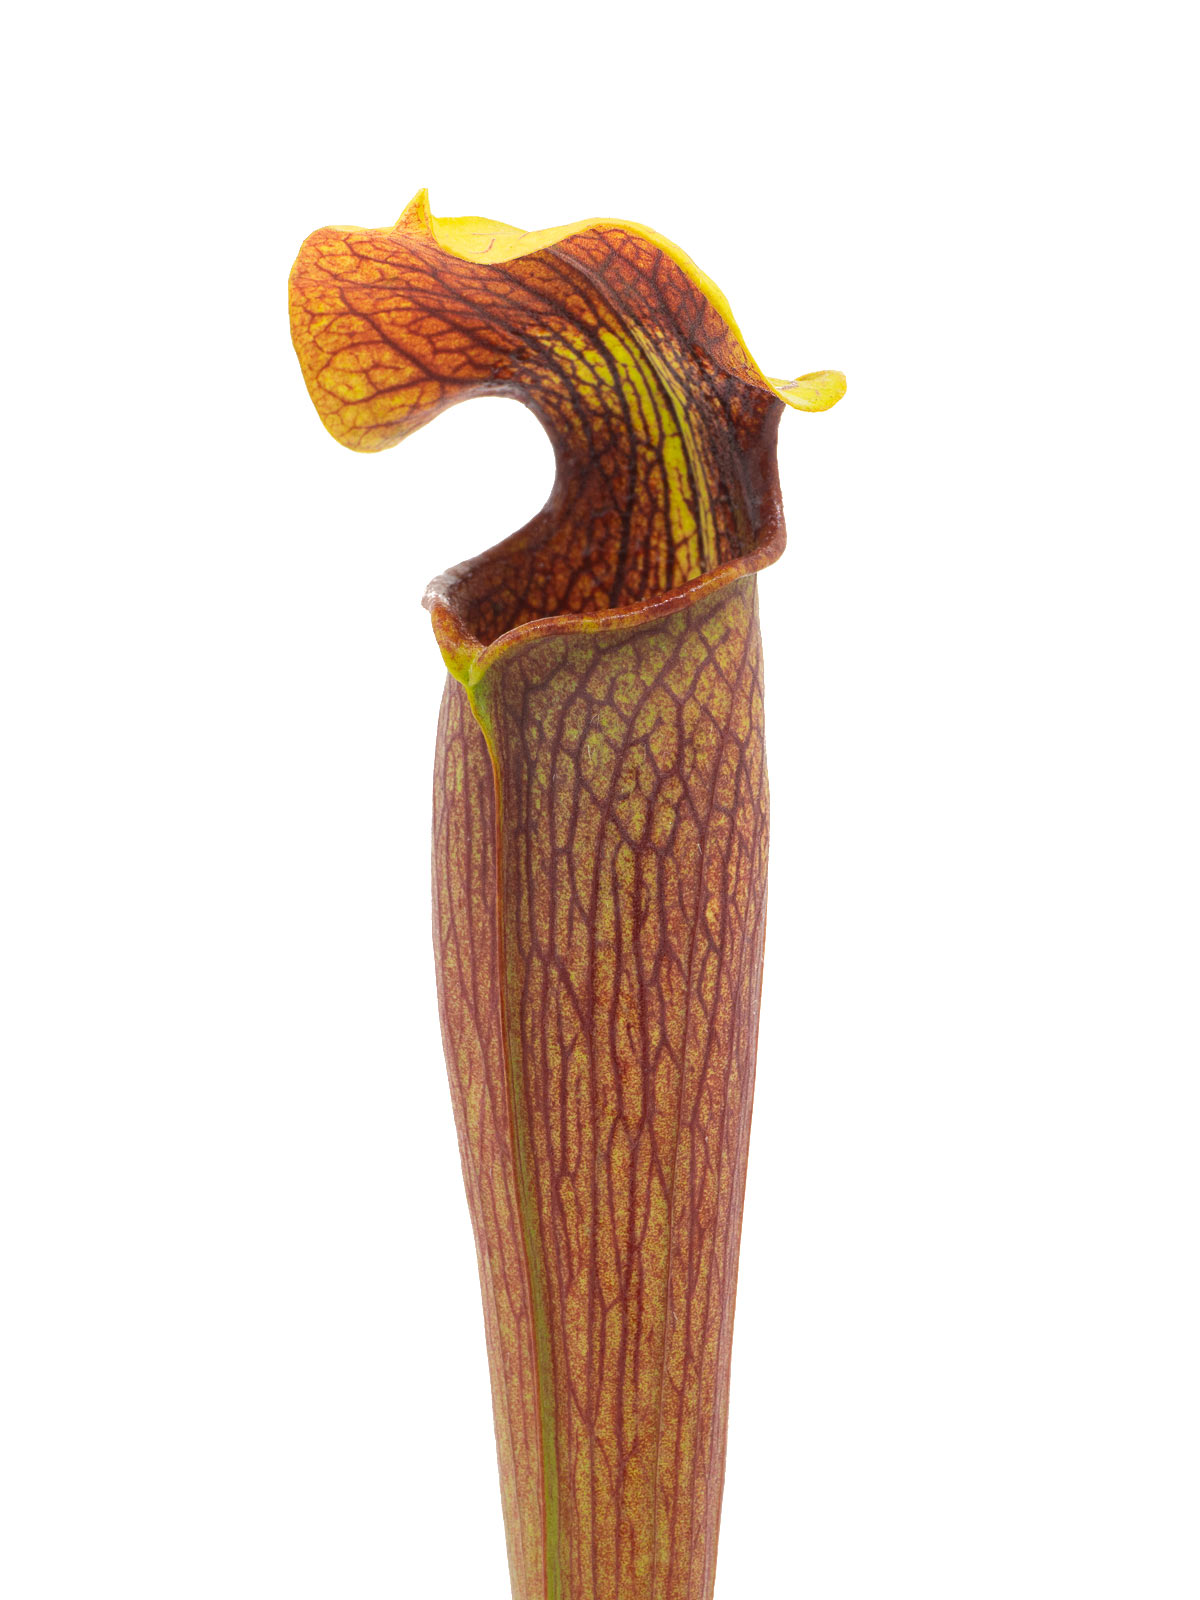 Sarracenia alata var. rubrioperculata - MK A46, tall pitchers, Stone County, Mississippi